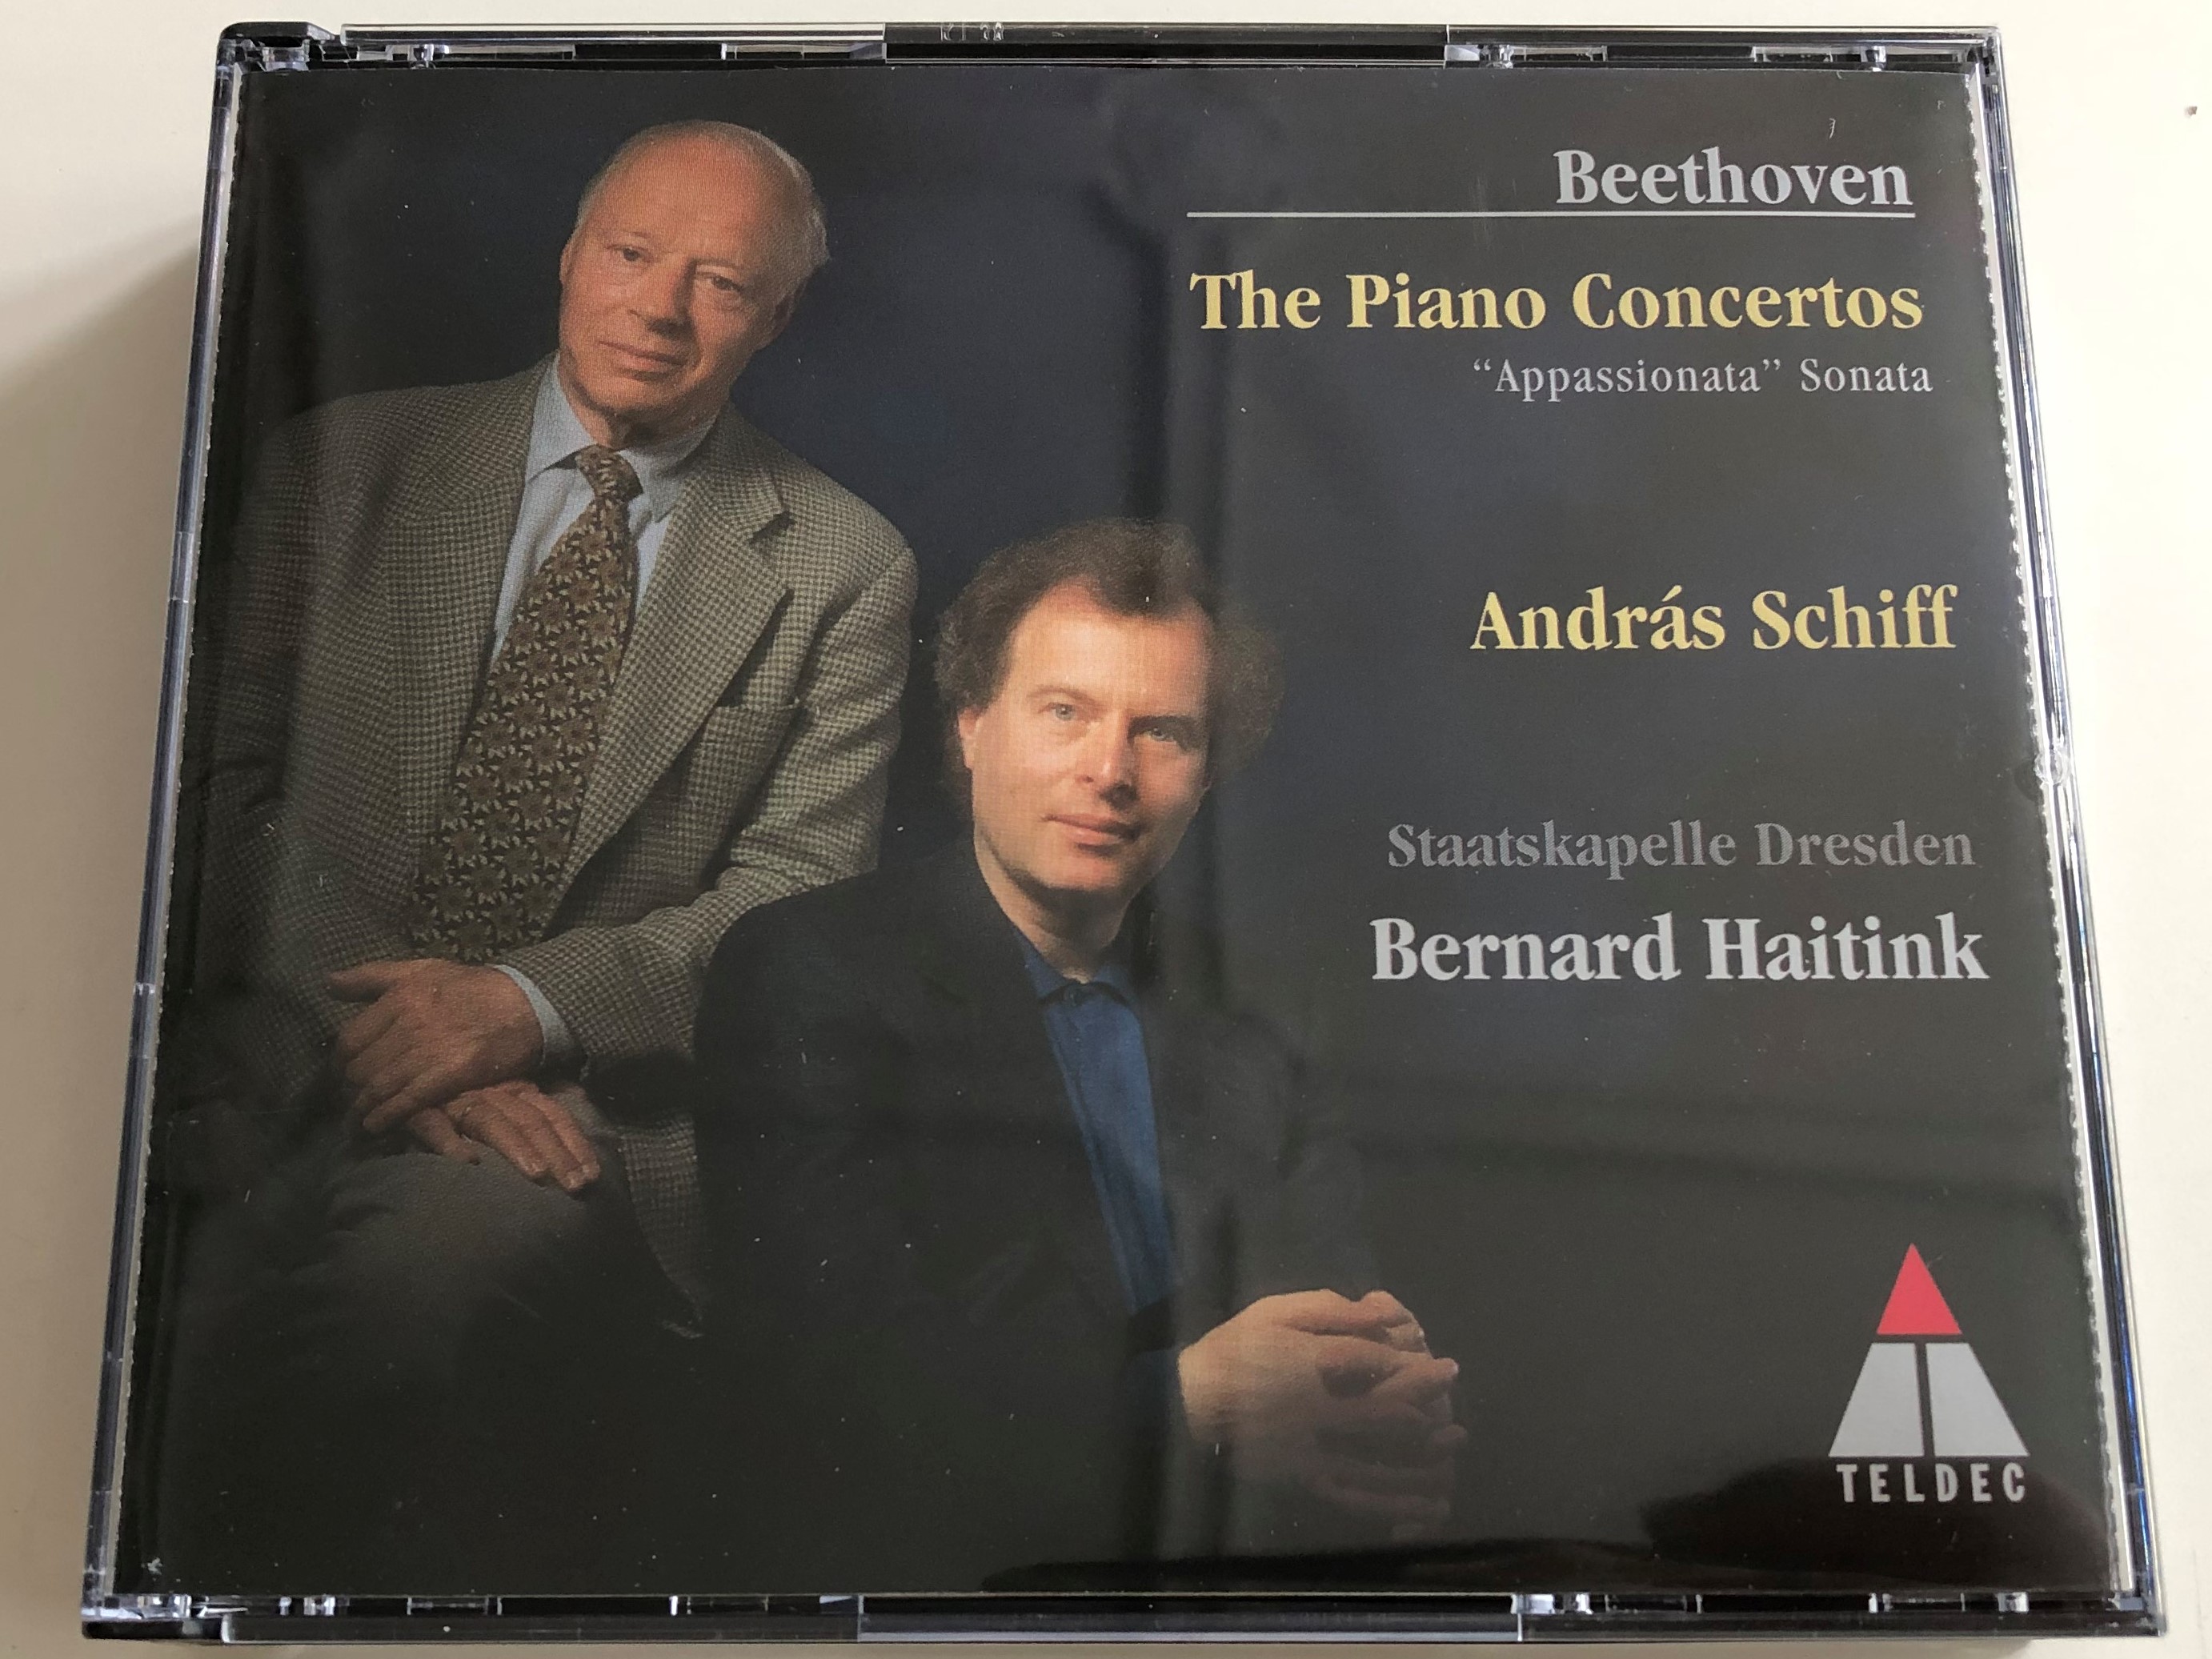 Beethoven The Piano Concertos "Appassionata" Sonata András Schiff, piano  Staatskapelle Dresden Bernard Haitink Teldec x Audio CD 1997  Bible in My Language